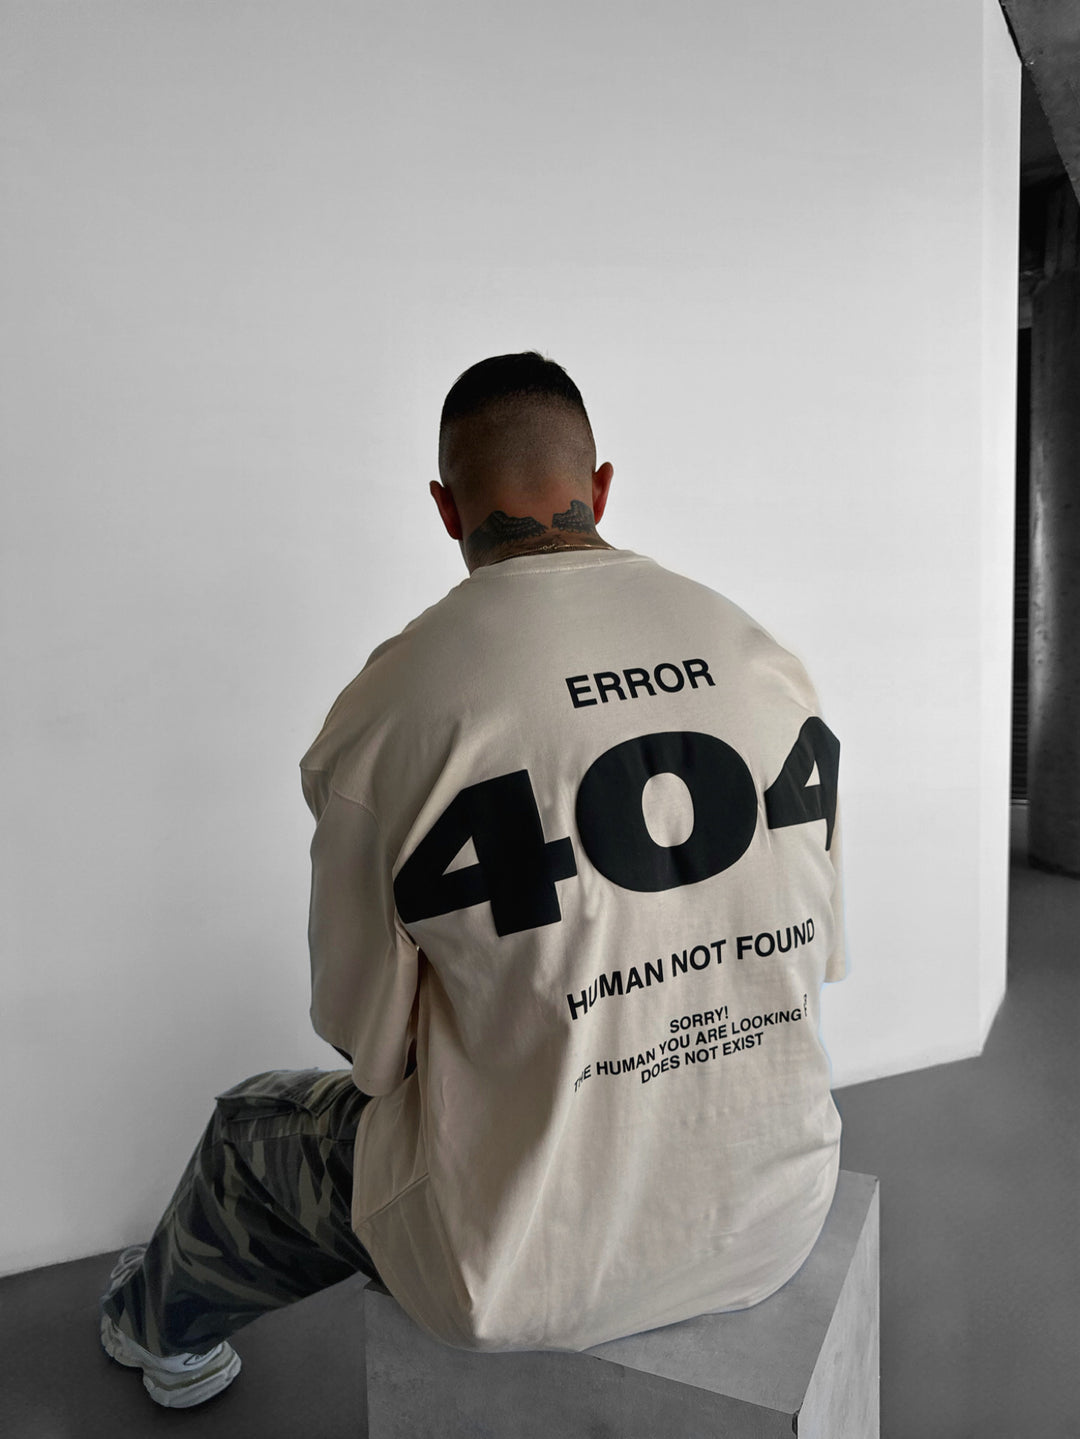 Oversize 404 T-shirt - Beige